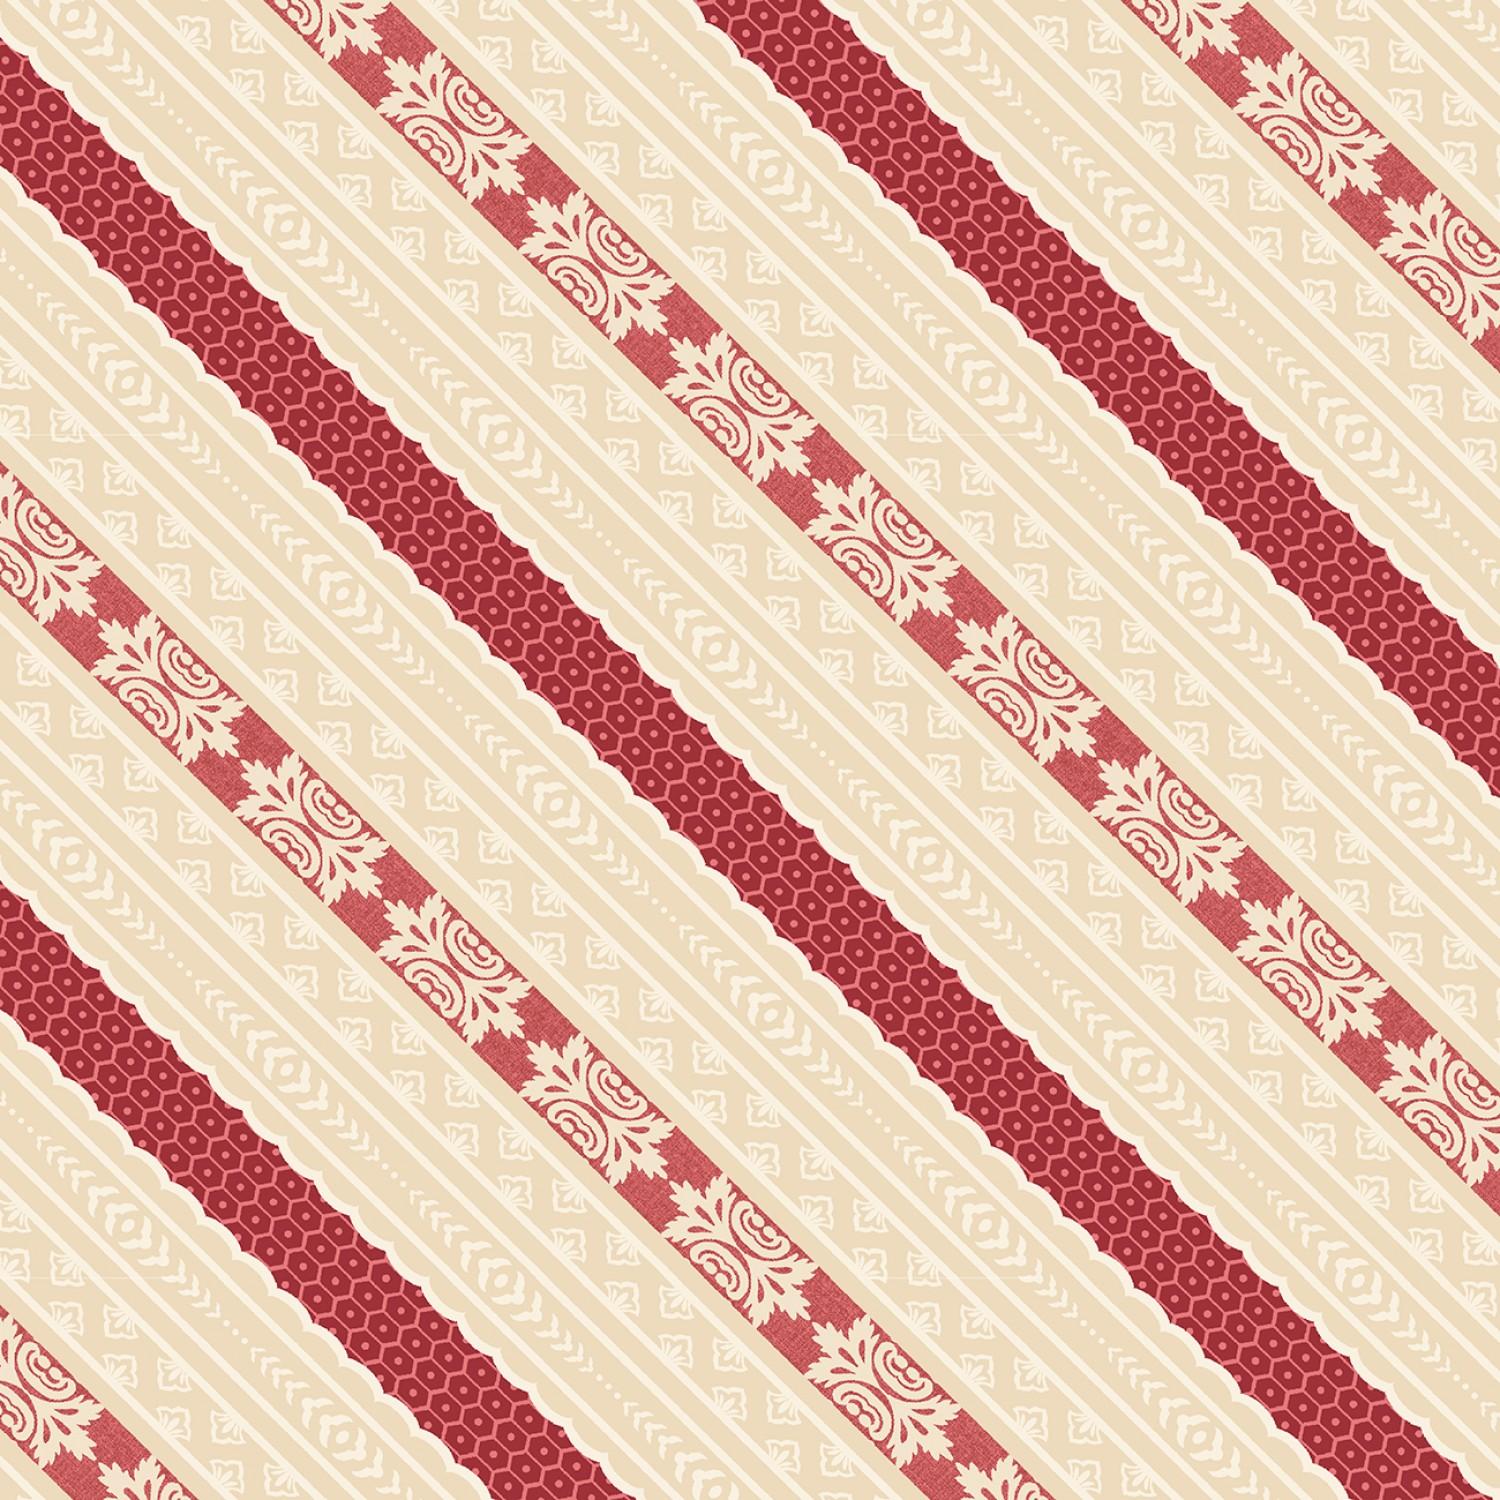 Pathways - Cream/Pink Ticking Stripe # 98704-133